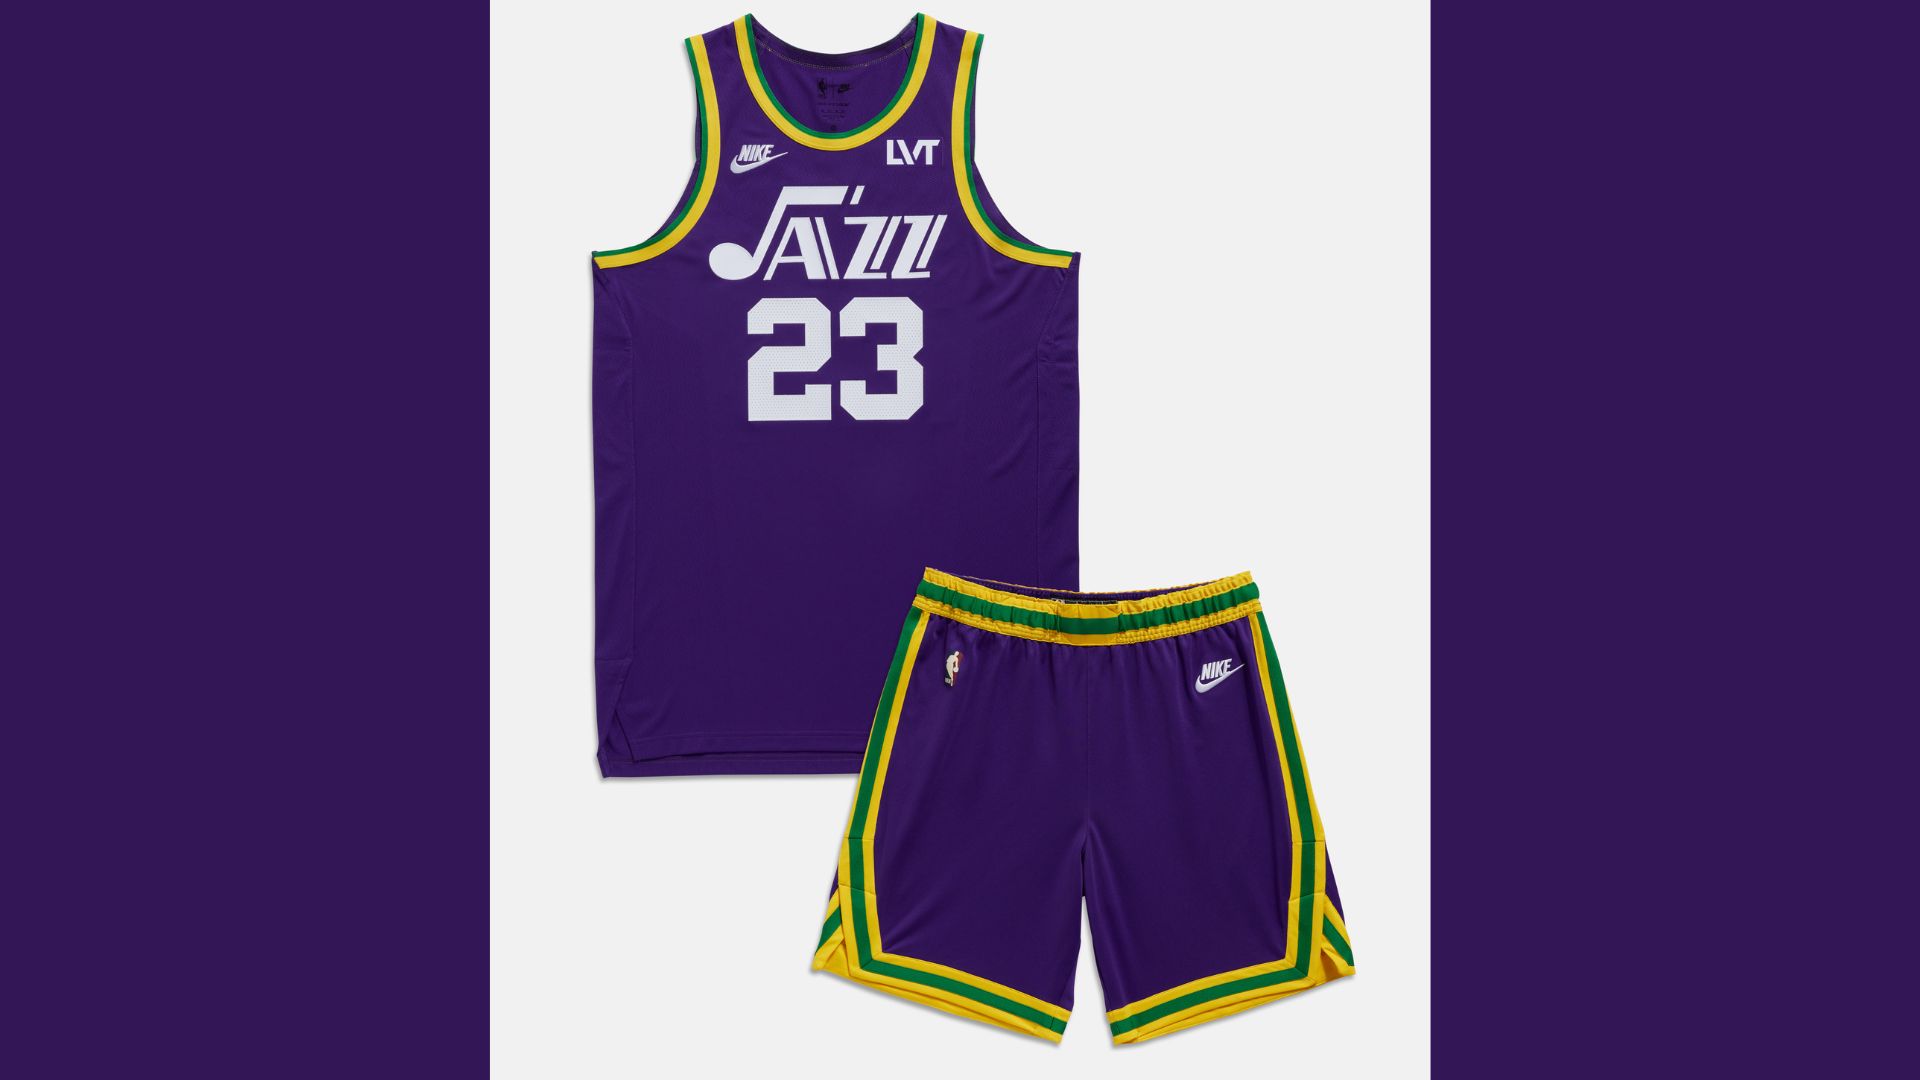 Utah Jazz to have throwback purple uniform next season